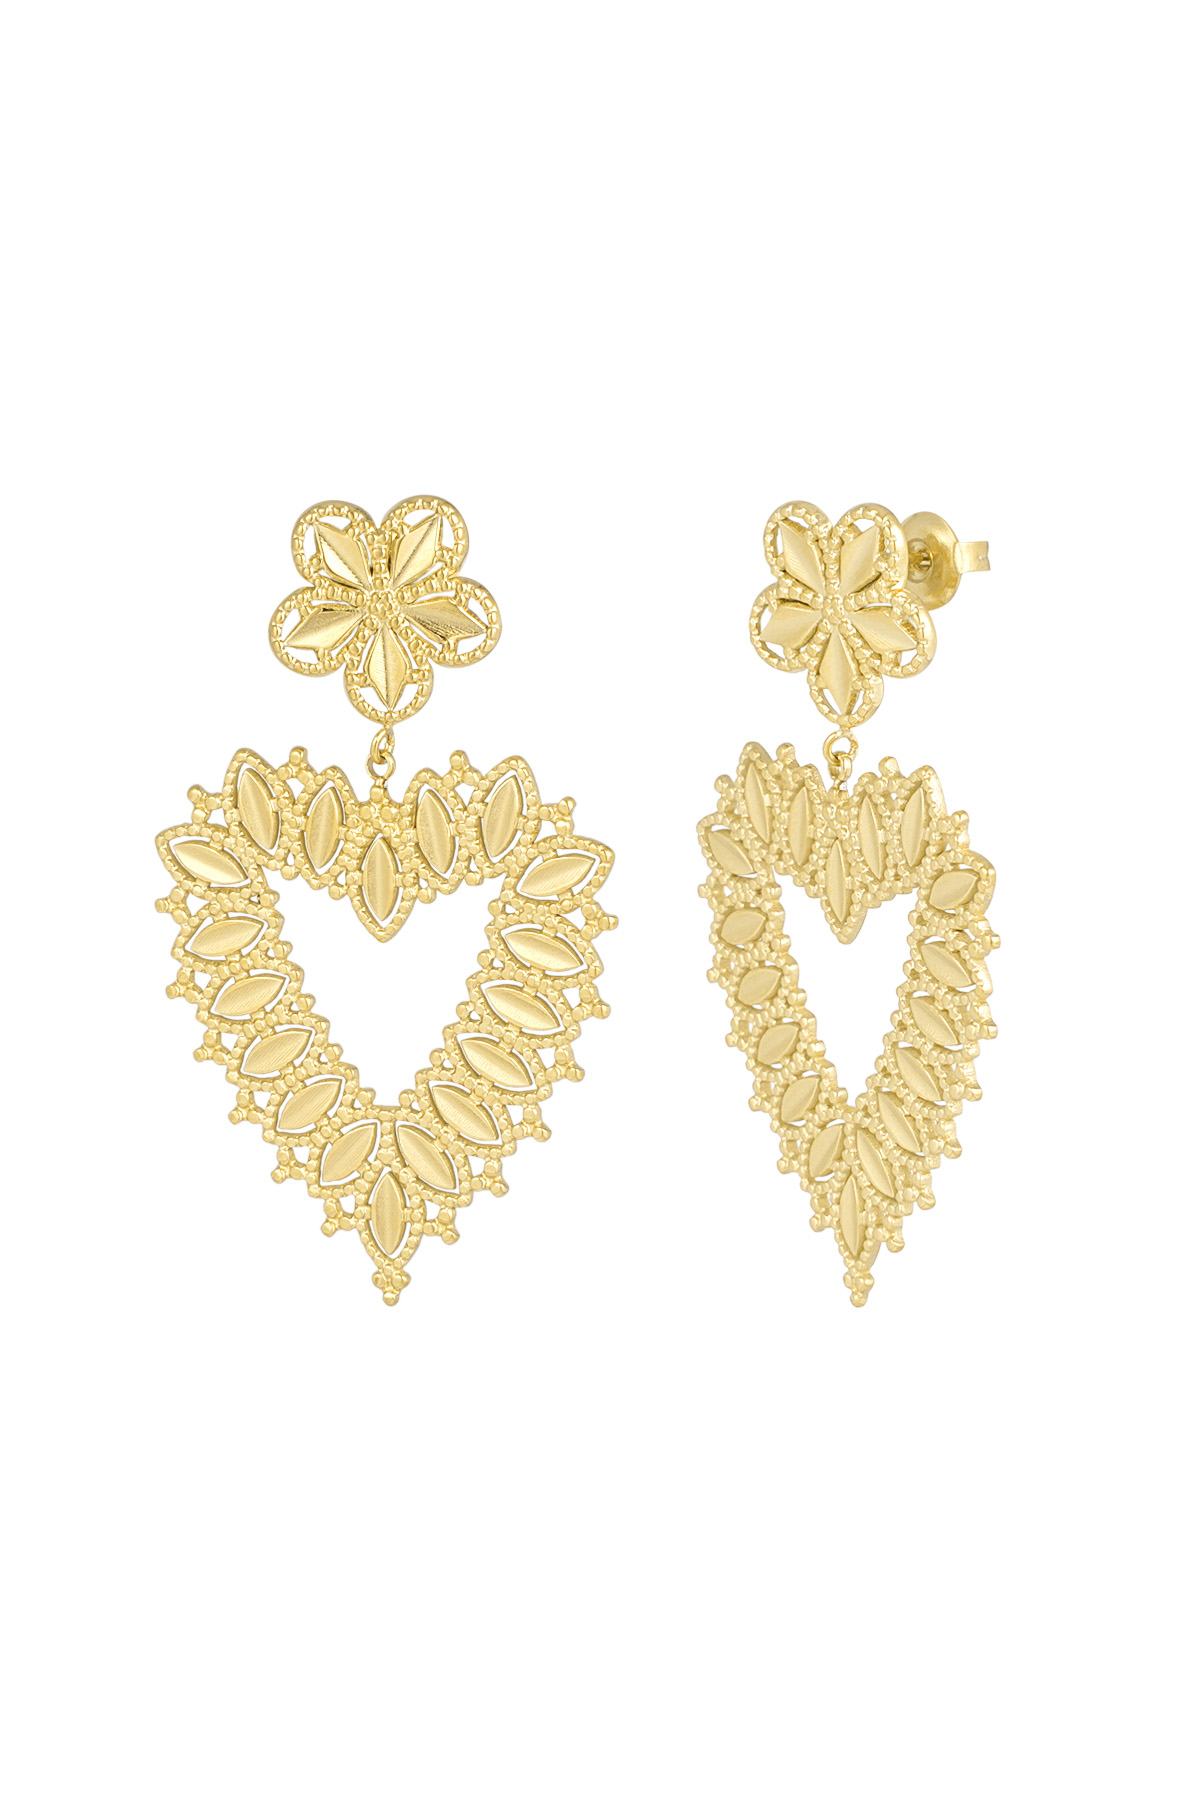 Flower earrings with heart shape pendant - gold